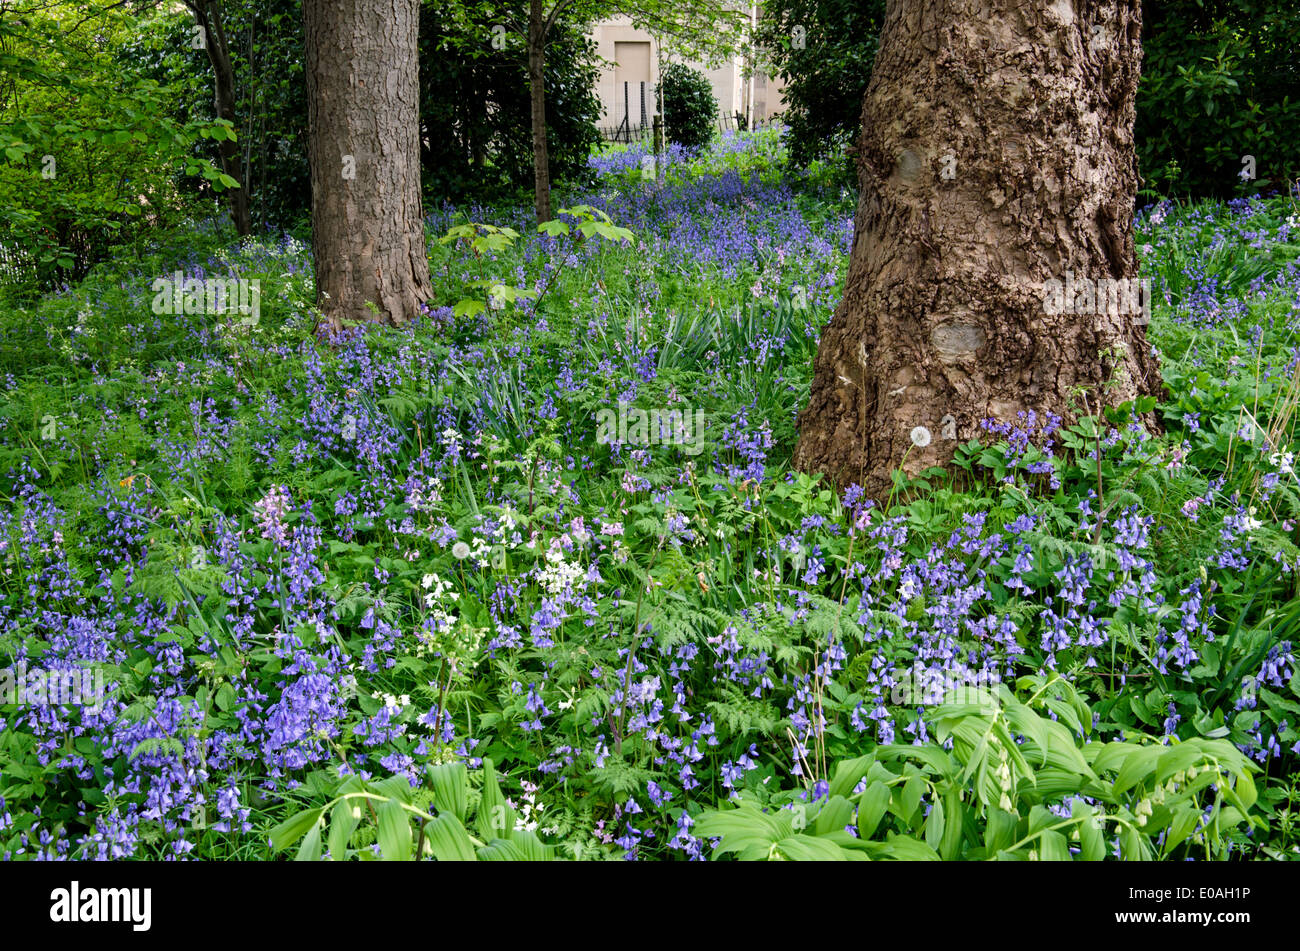 A rather overgrown garden full of bluebells in a corner of Ann Street in Edinburgh, Scotland, UK. Stock Photo